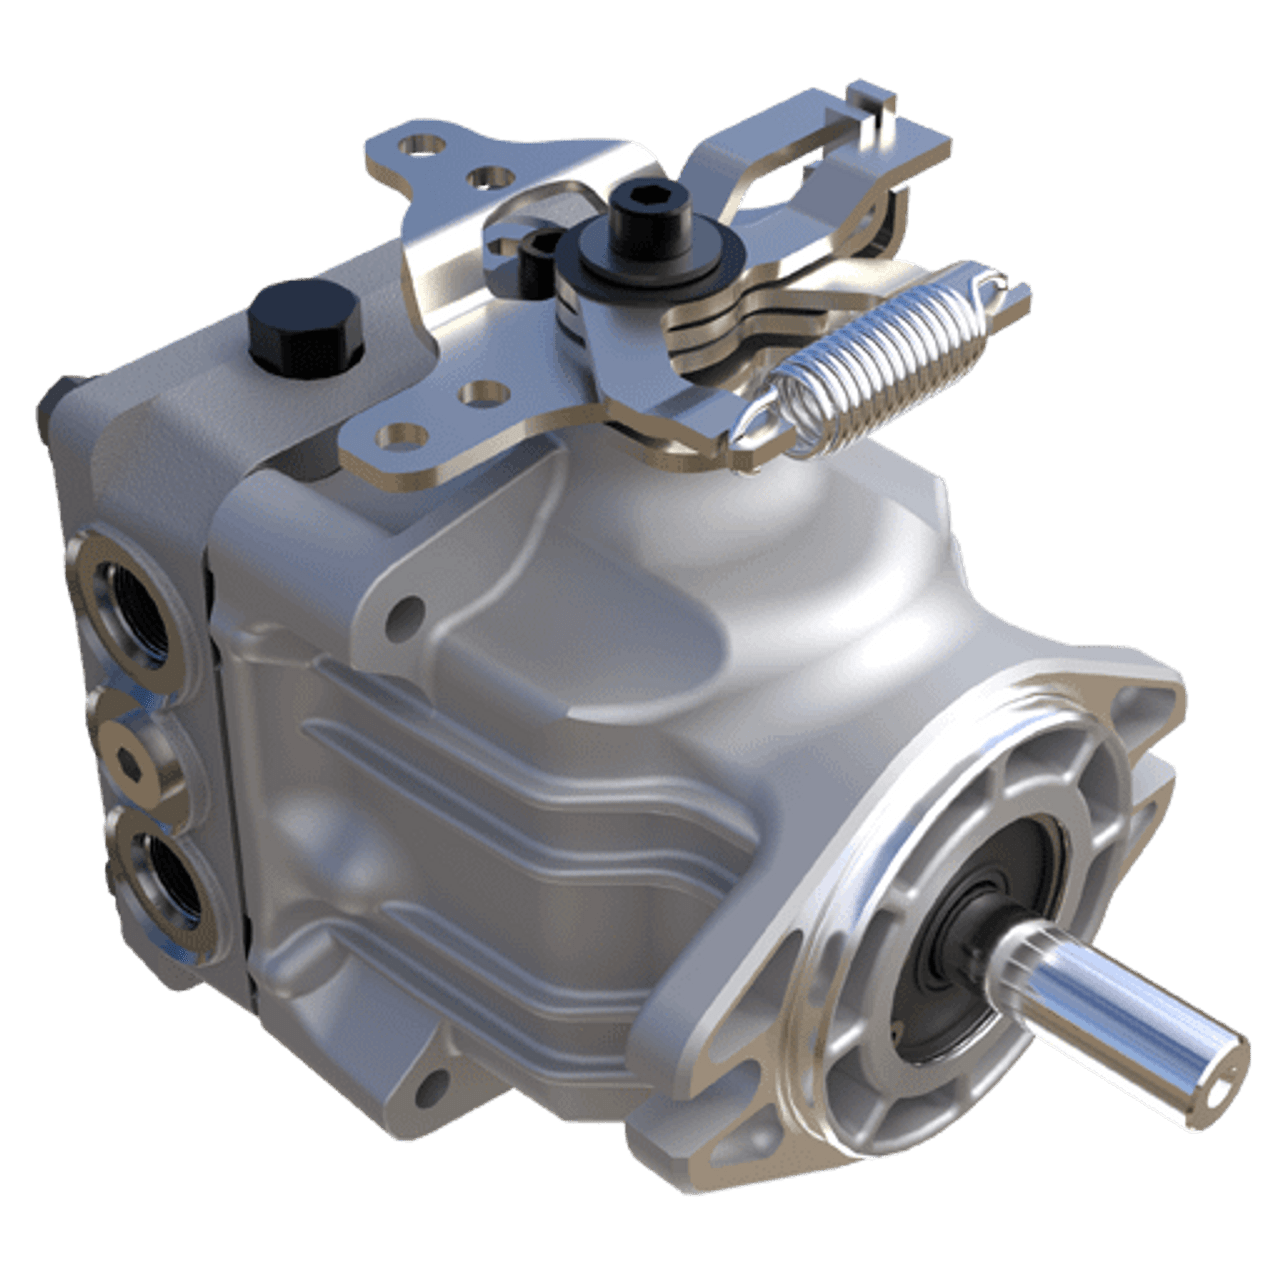 Hydro Gear PG-1HCA-DY1X-XXXX Hydraulic Pump P Series | Original OEM Part | Free Shipping - LawnMowerPartsWorld.com